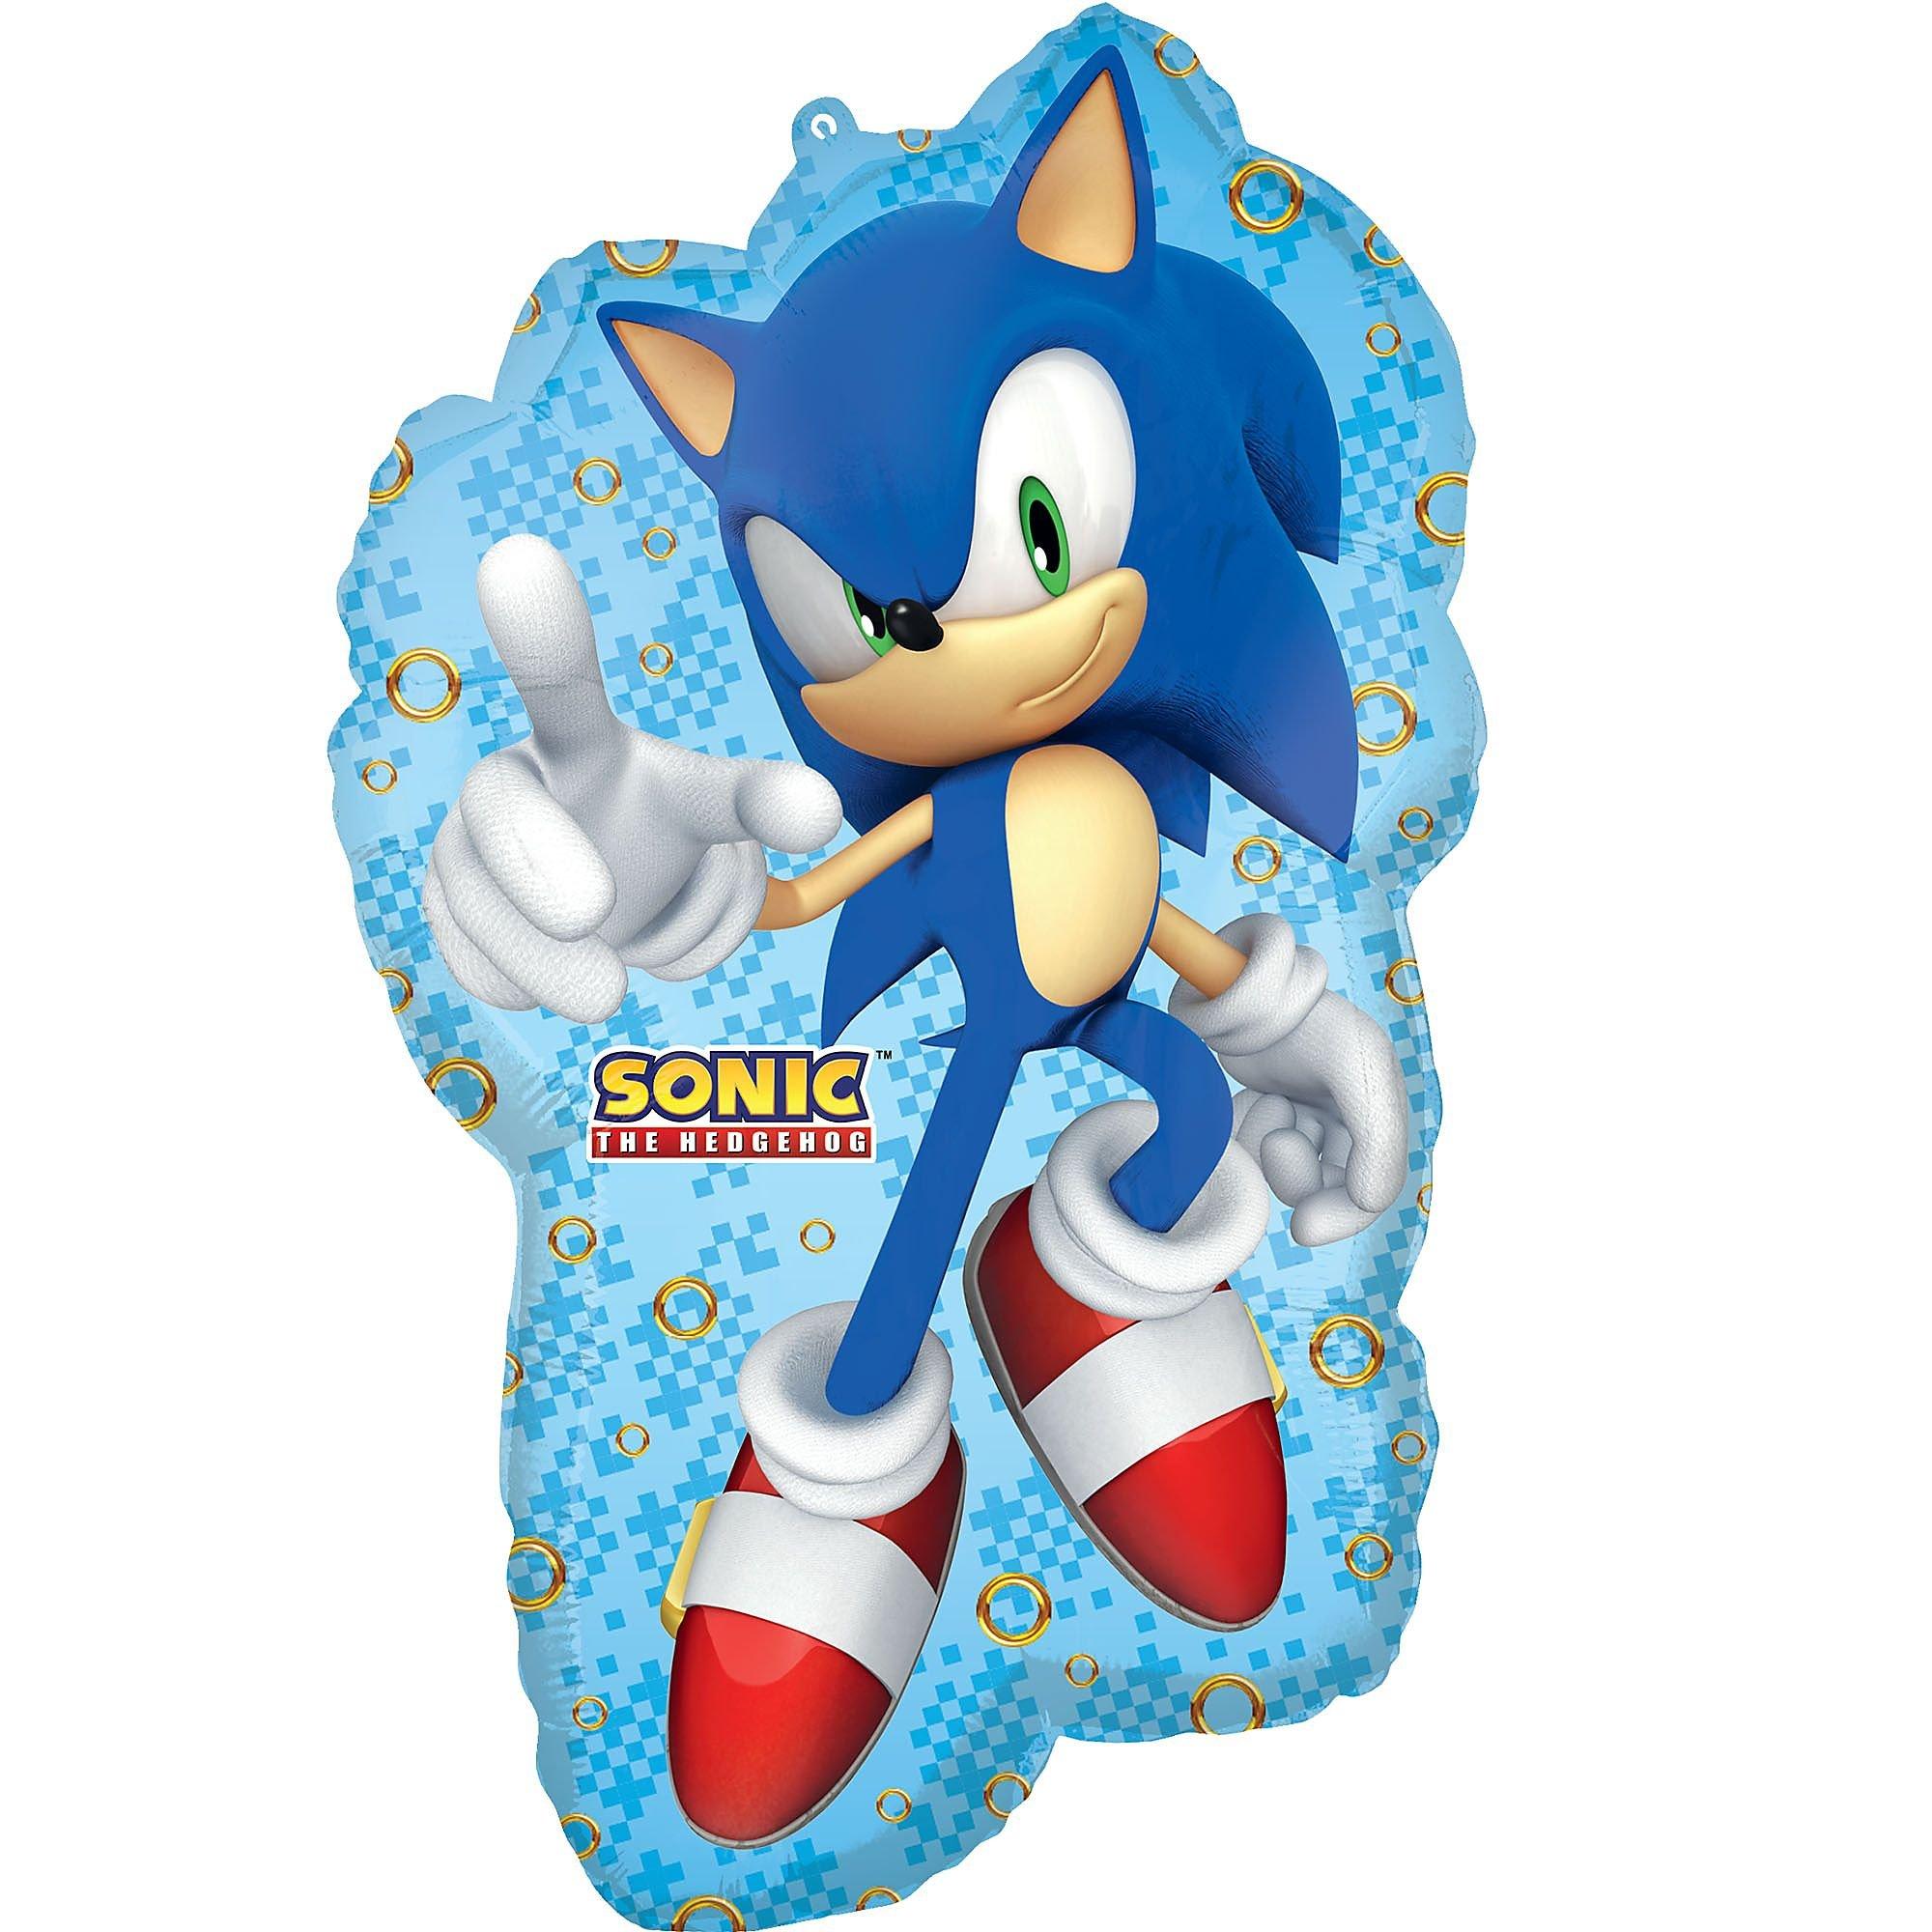 13 ideas de Sonic  disfraz sonic, cumpleaños de sonic, fiesta de sonic